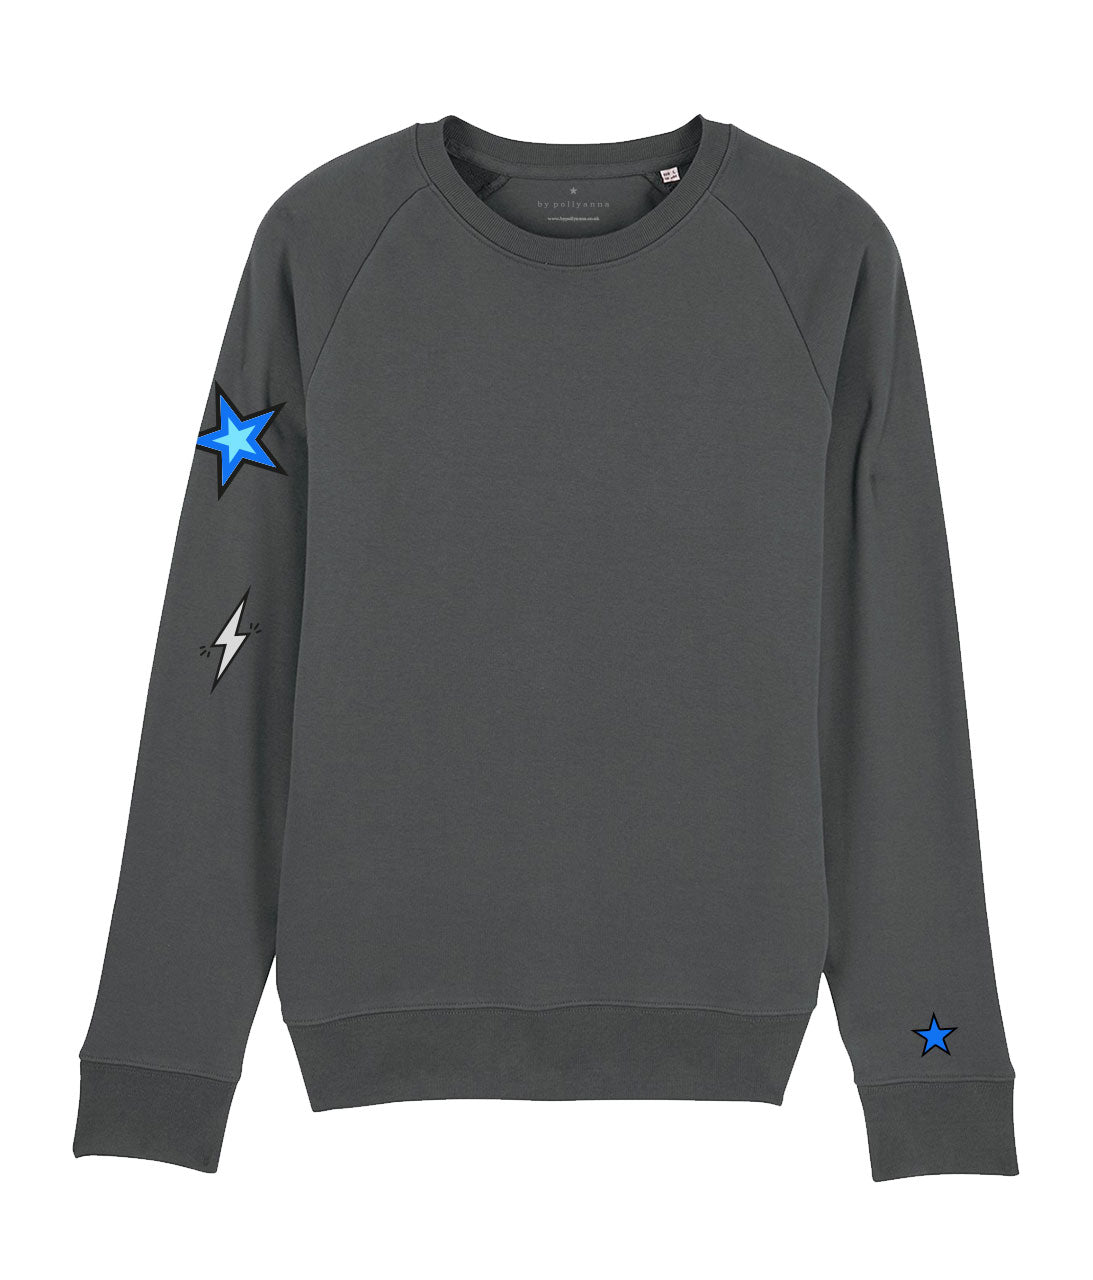 Anthracite Stars and Lightning Bolt Sweatshirt